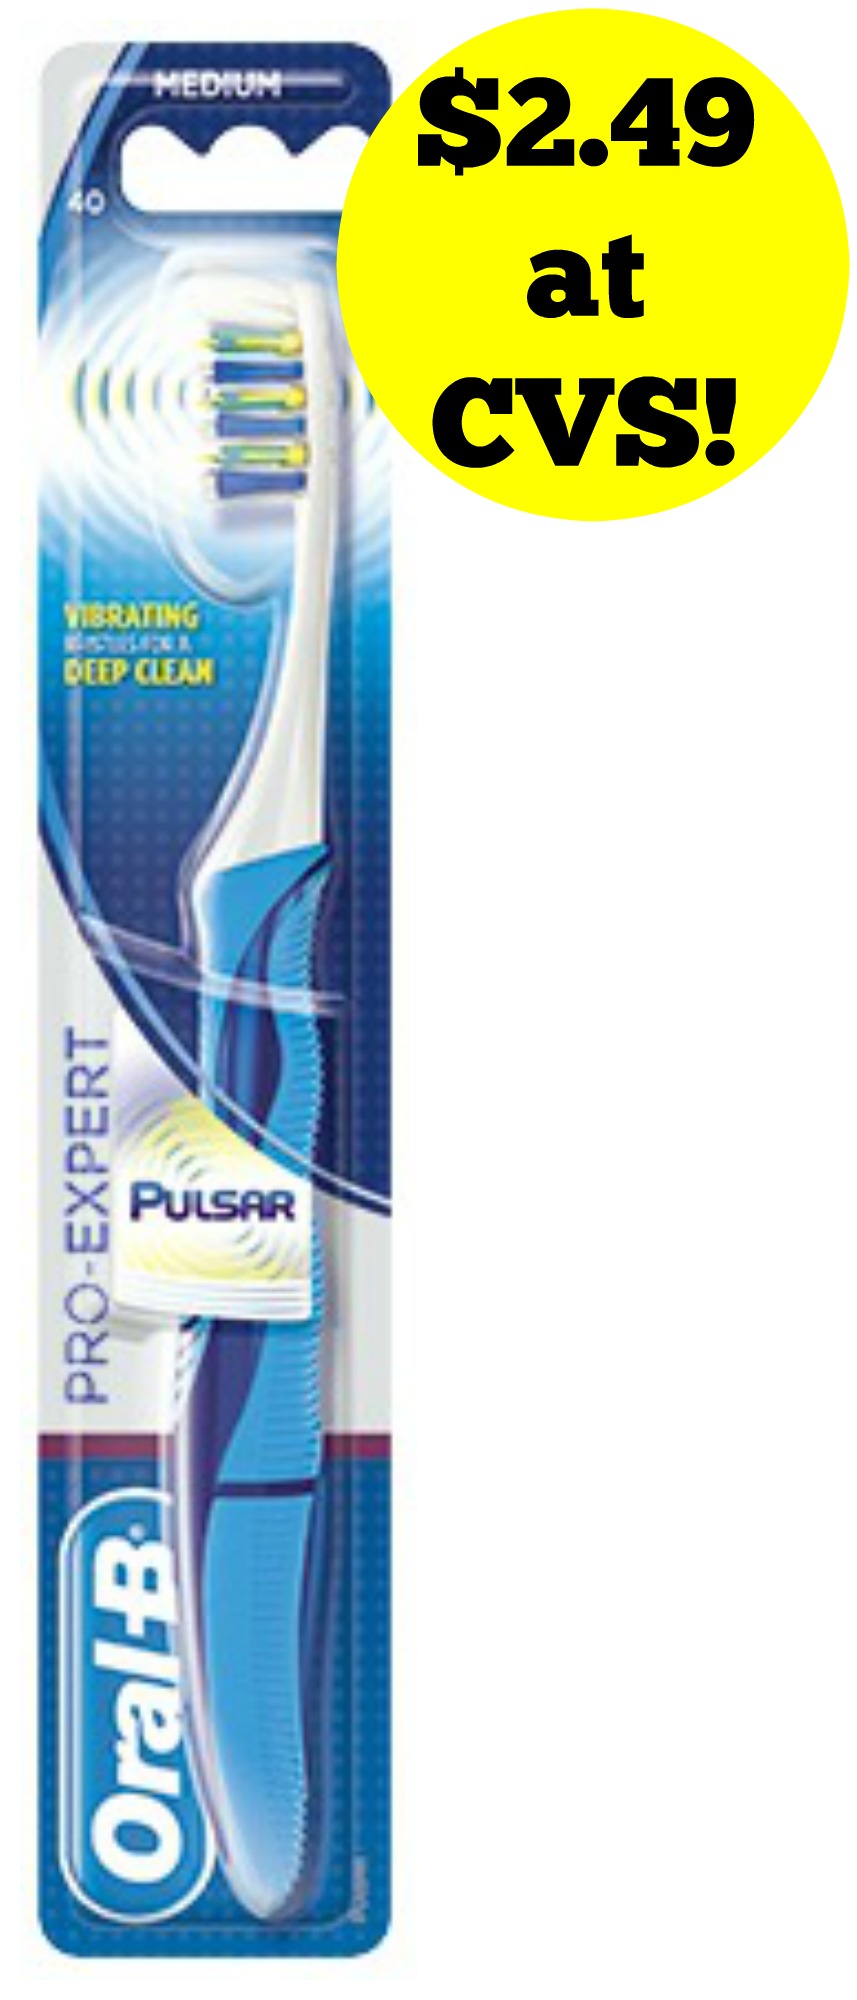 oral-b pulsar toothbrush cvs a2s